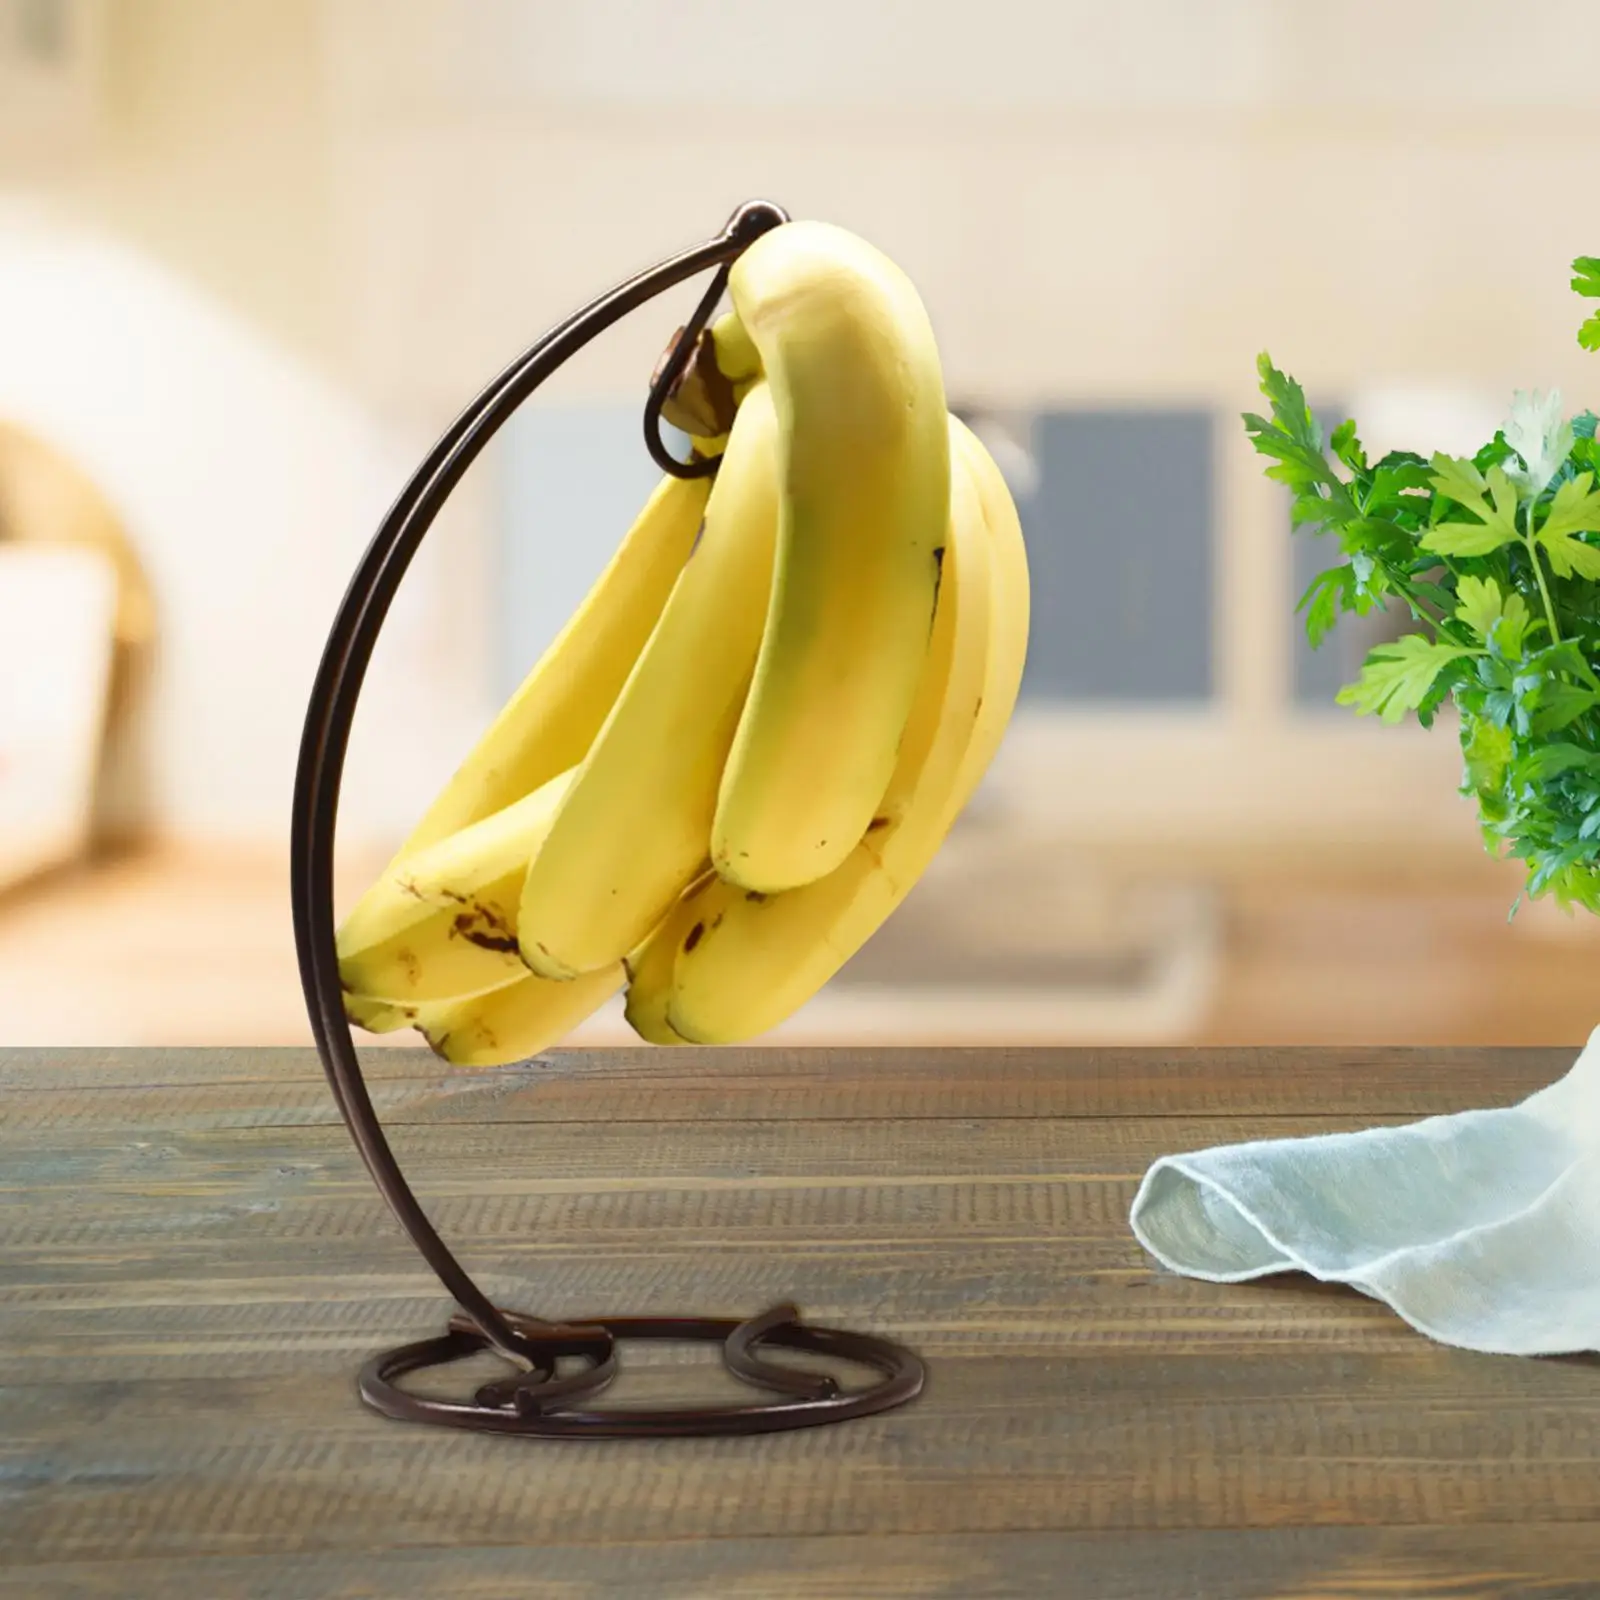 Banana Hanger Stand Iron Lightweight Banana Hook Banana Holder Tree Stand Hook Banana Stand for Kitchen Dining Table Countertop